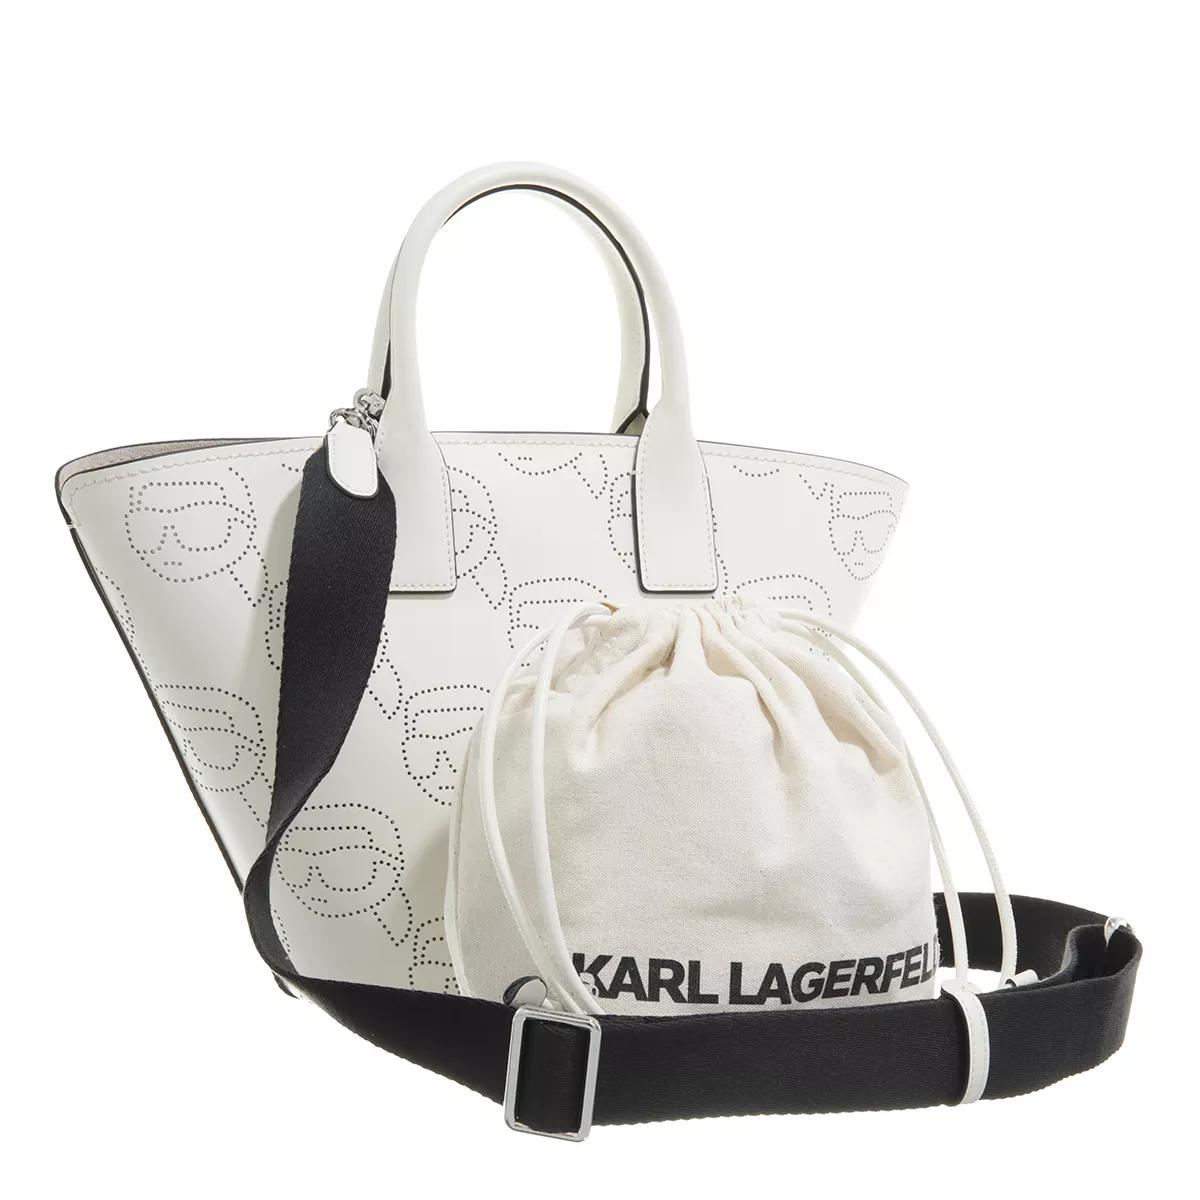 Karl Lagerfeld Totes K Ikonik 2.0 Perforated Tote in crème